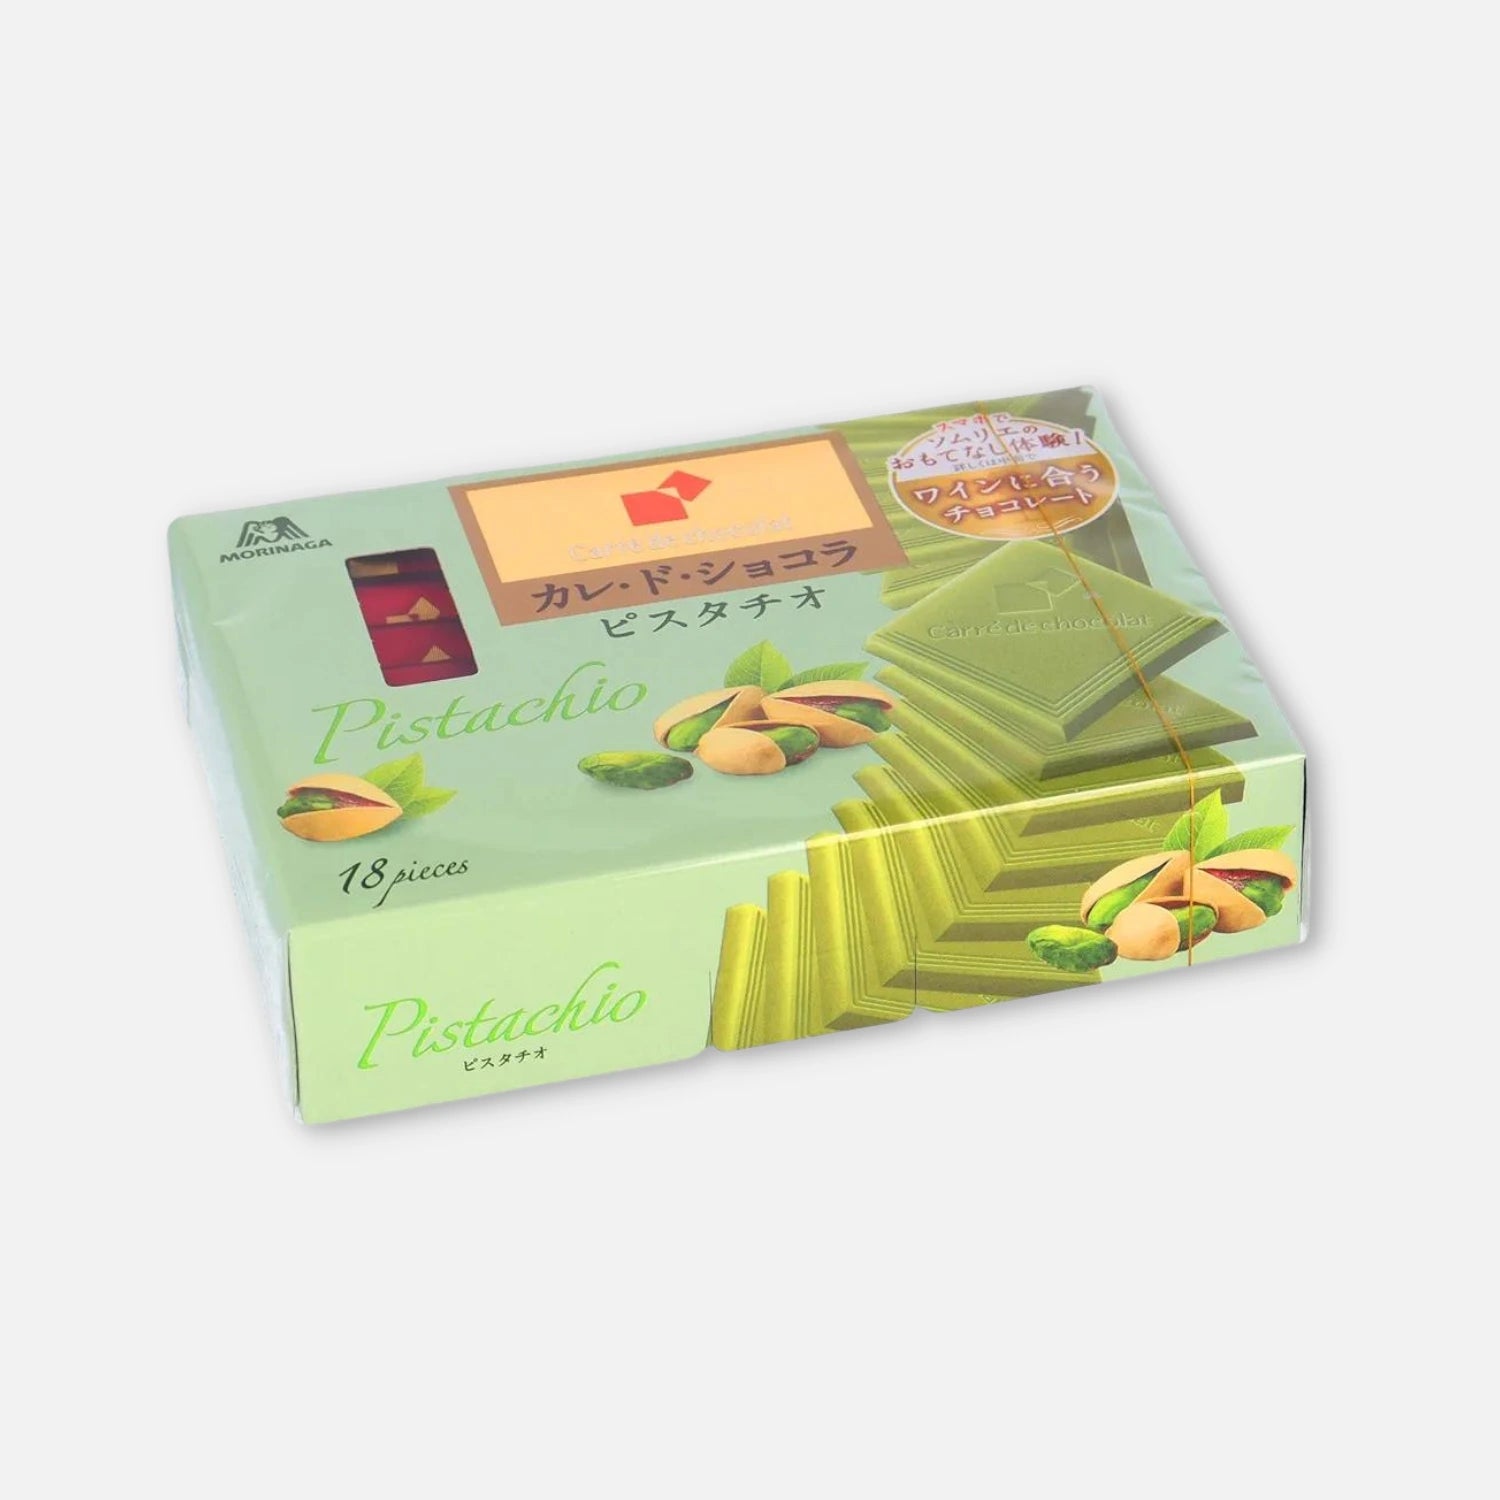 Morinaga Premium Carré de Chocolat Pistachios (18 Units) - Buy Me Japan